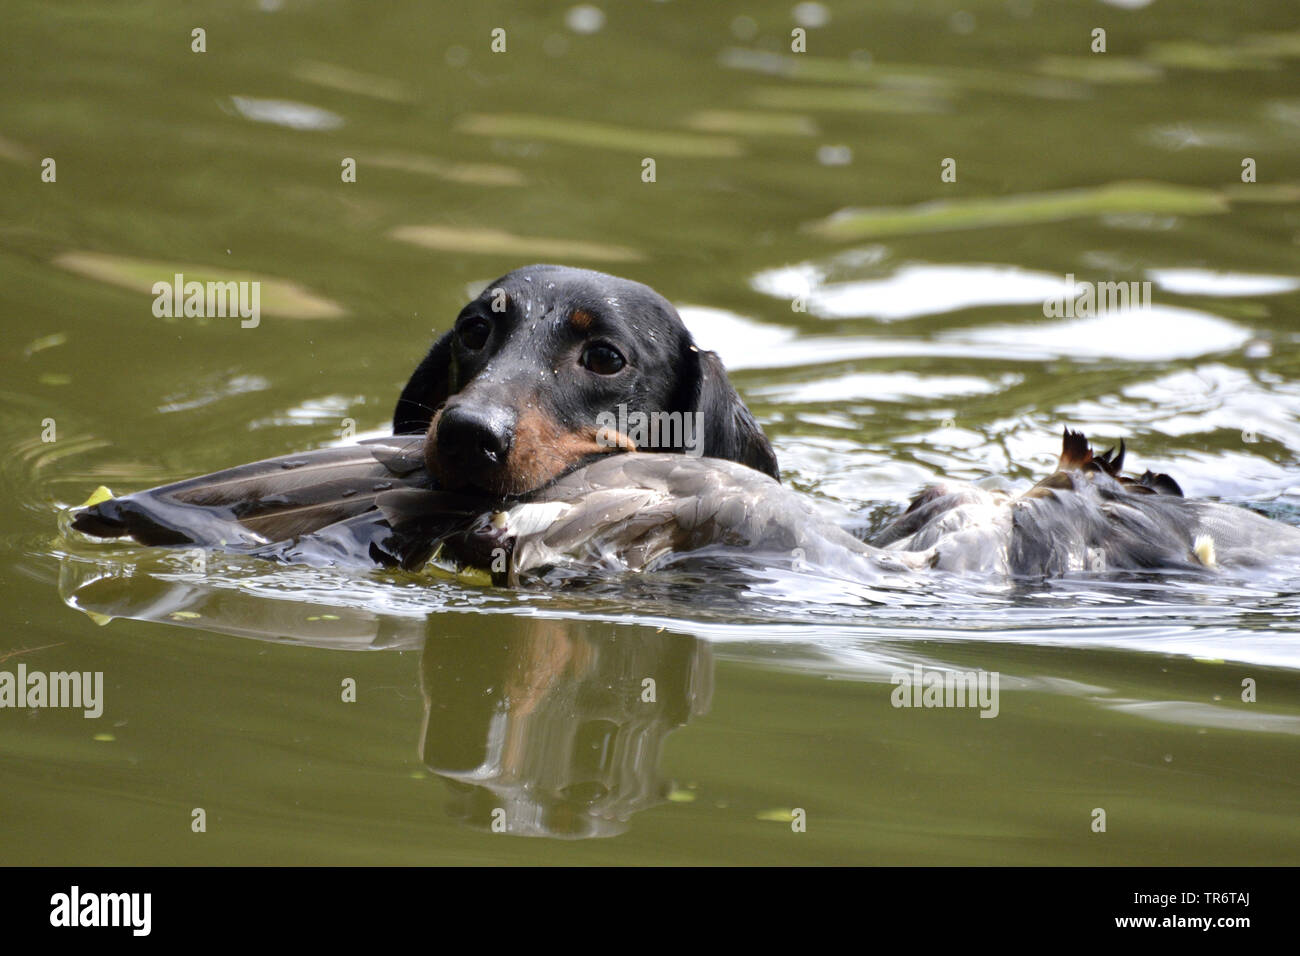 dachshund duck hunting